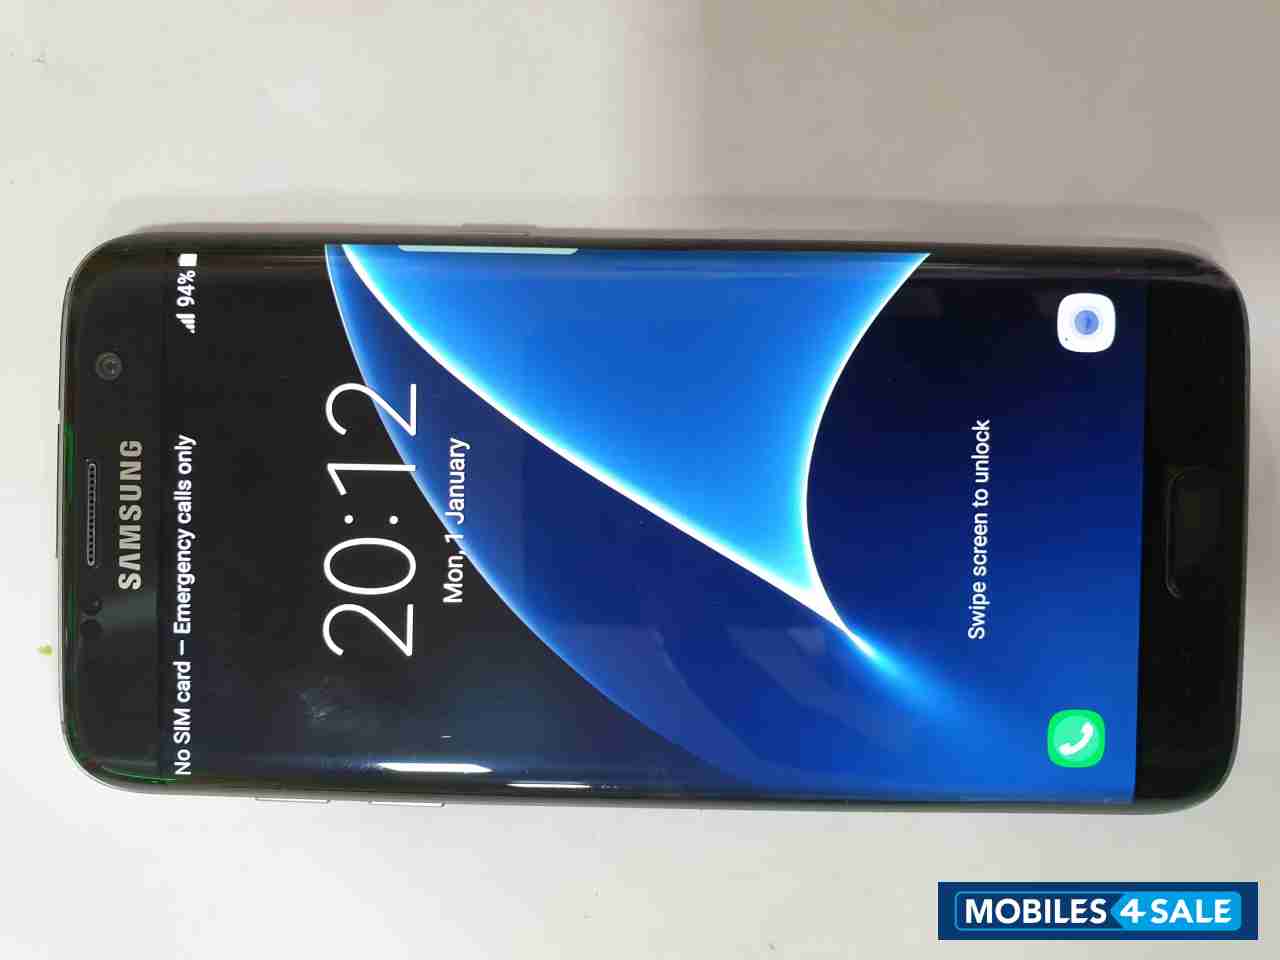 Samsung  Galaxy s7 edge